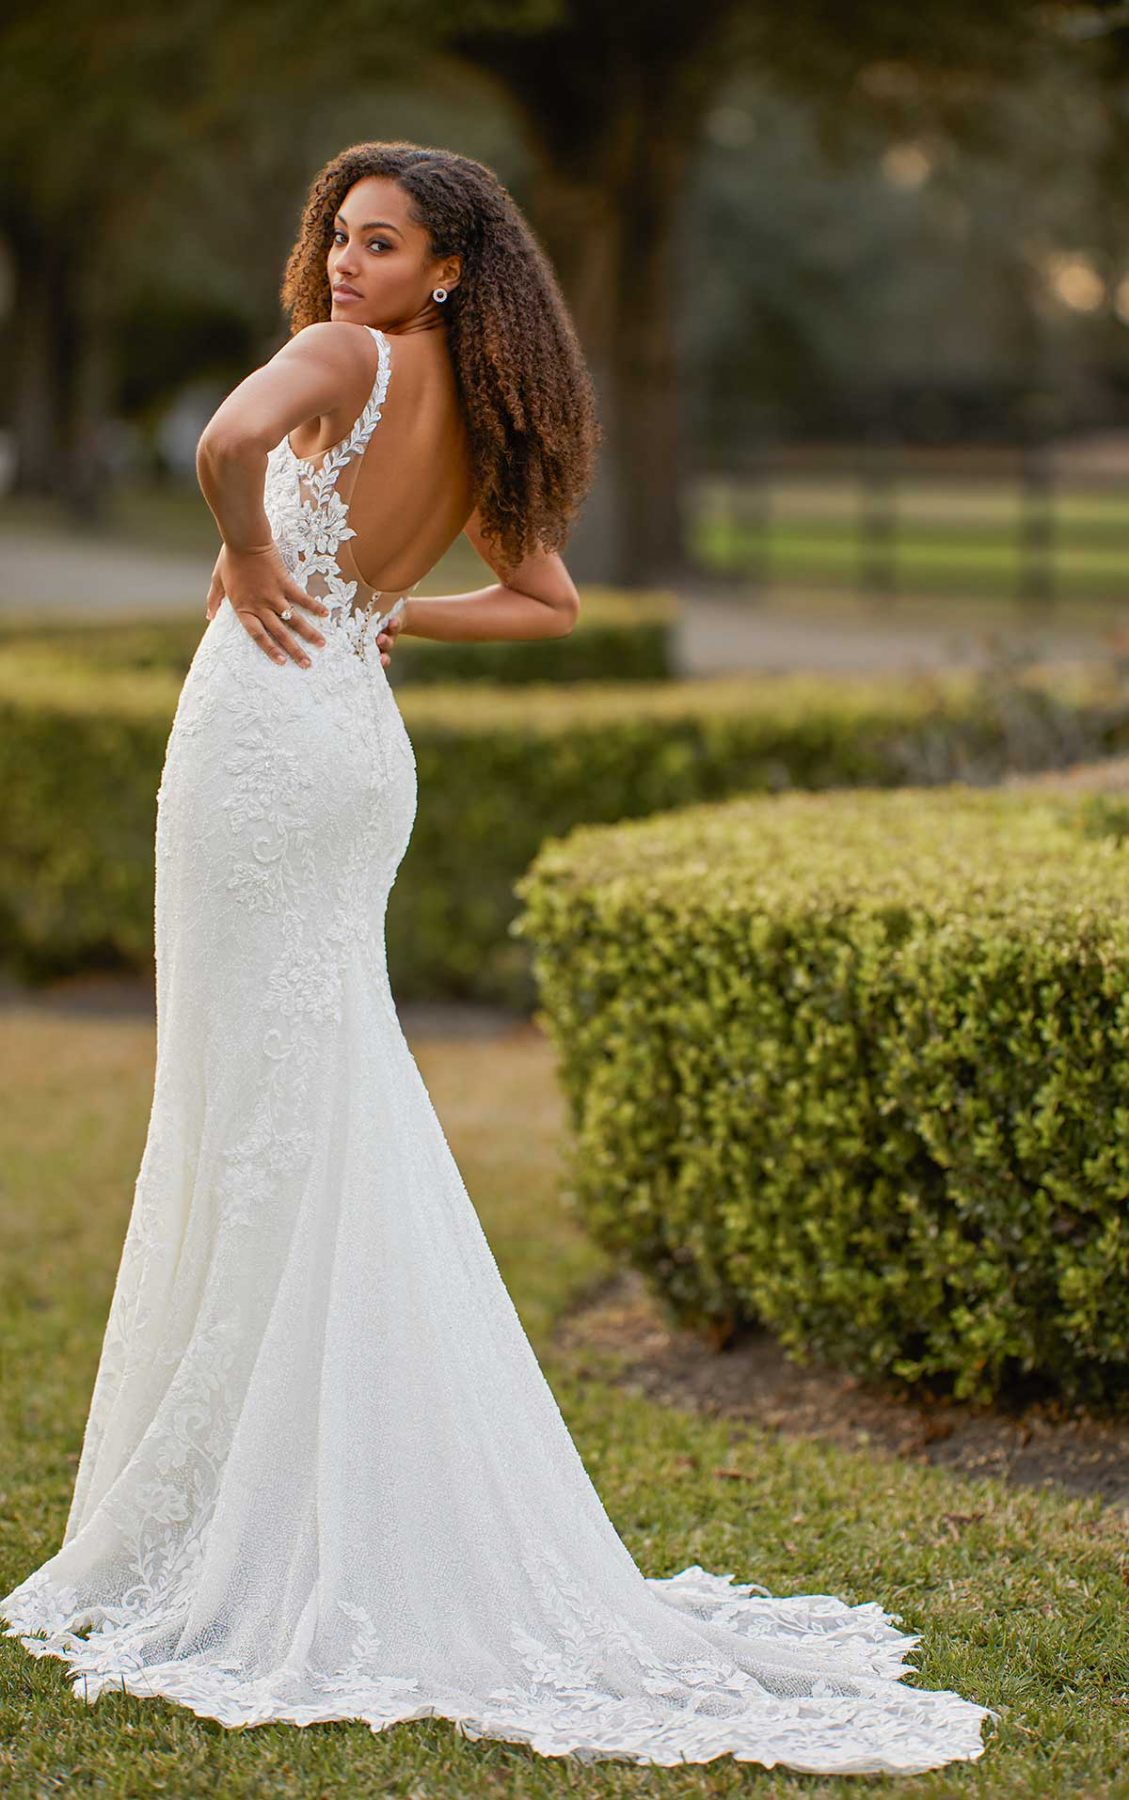 Lace Wedding Dress Bridal Accessories Nelsonismissing